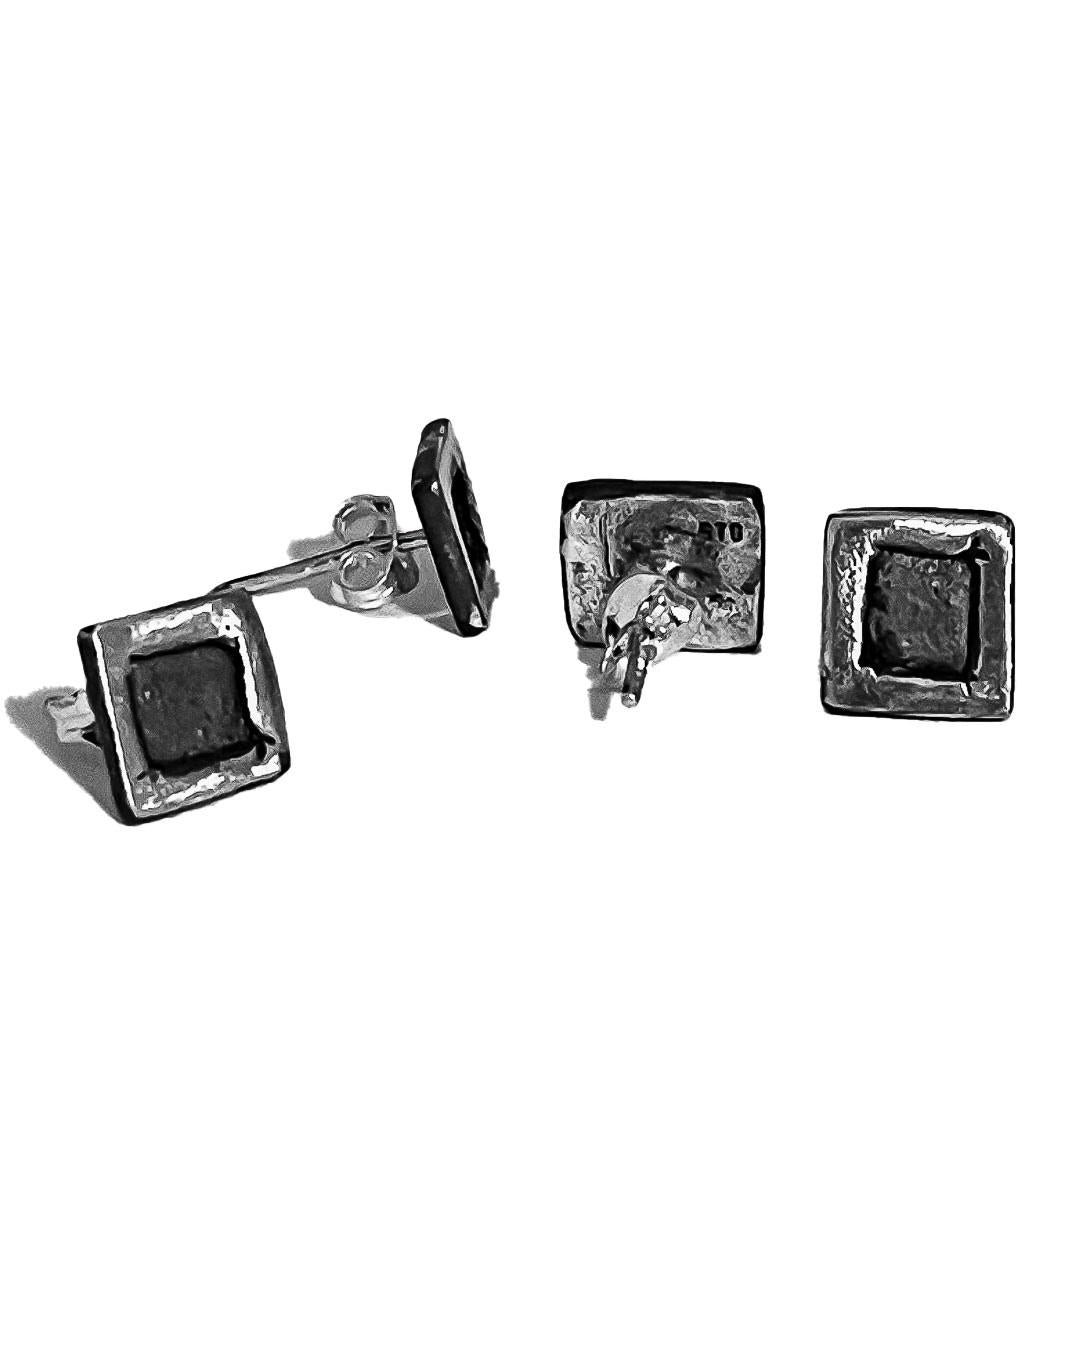 Modernist Earrings No. 6 - Geometric Square Stud Earrings in Oxidised Sterling Silver